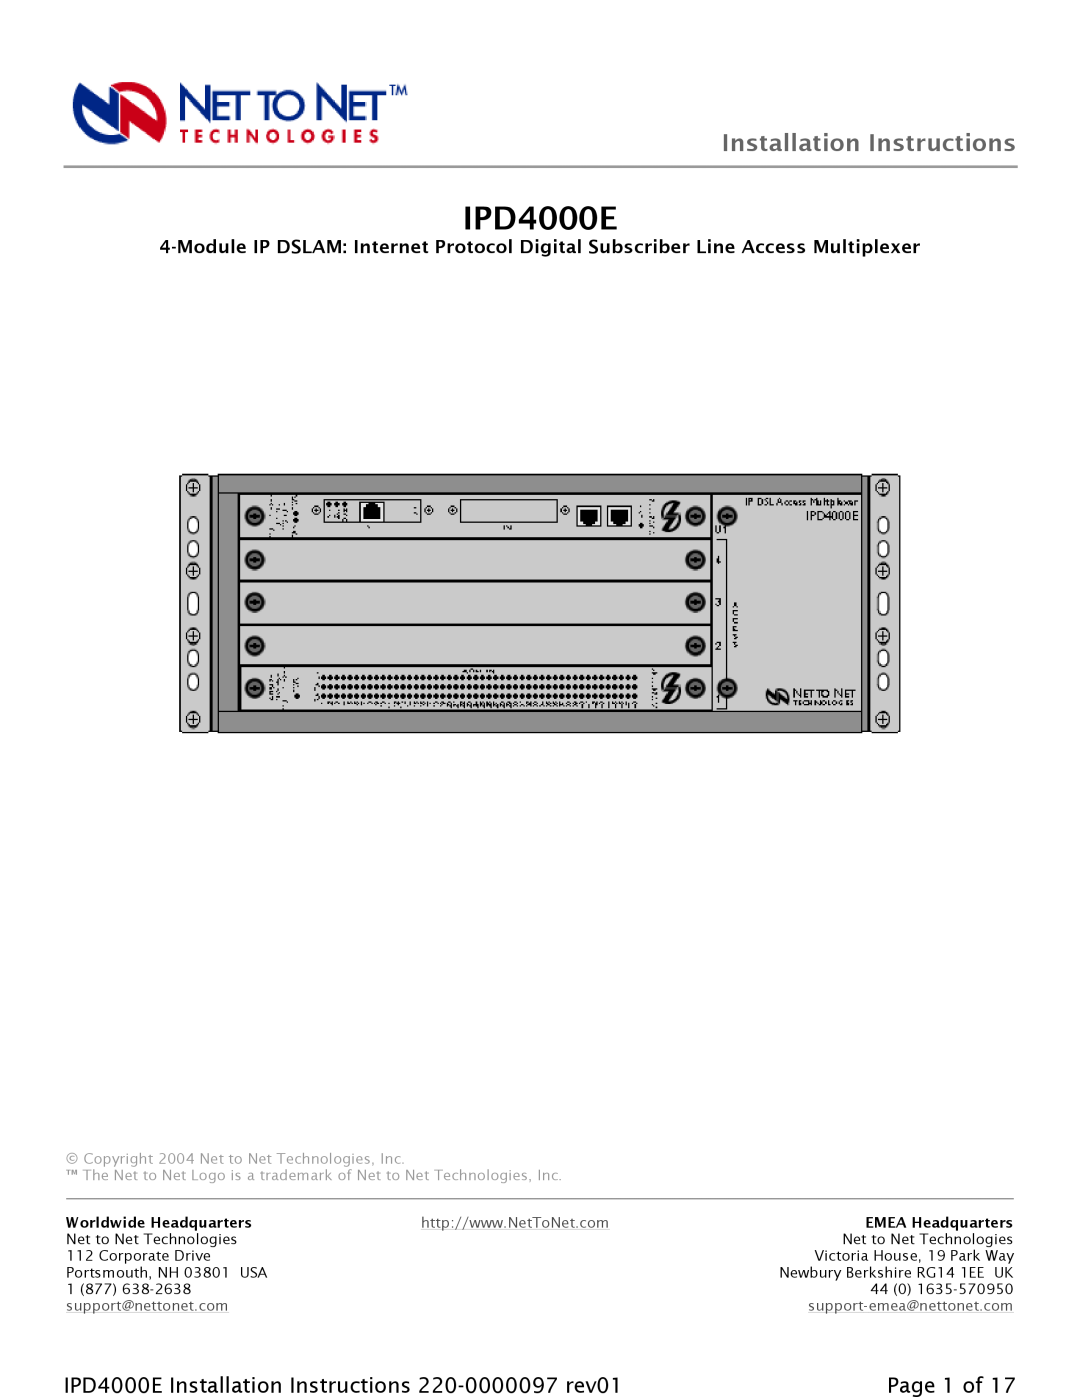 Paradyne IPD4000E installation instructions Installation Instructions, Copyright 2004 Net to Net Technologies, Inc 